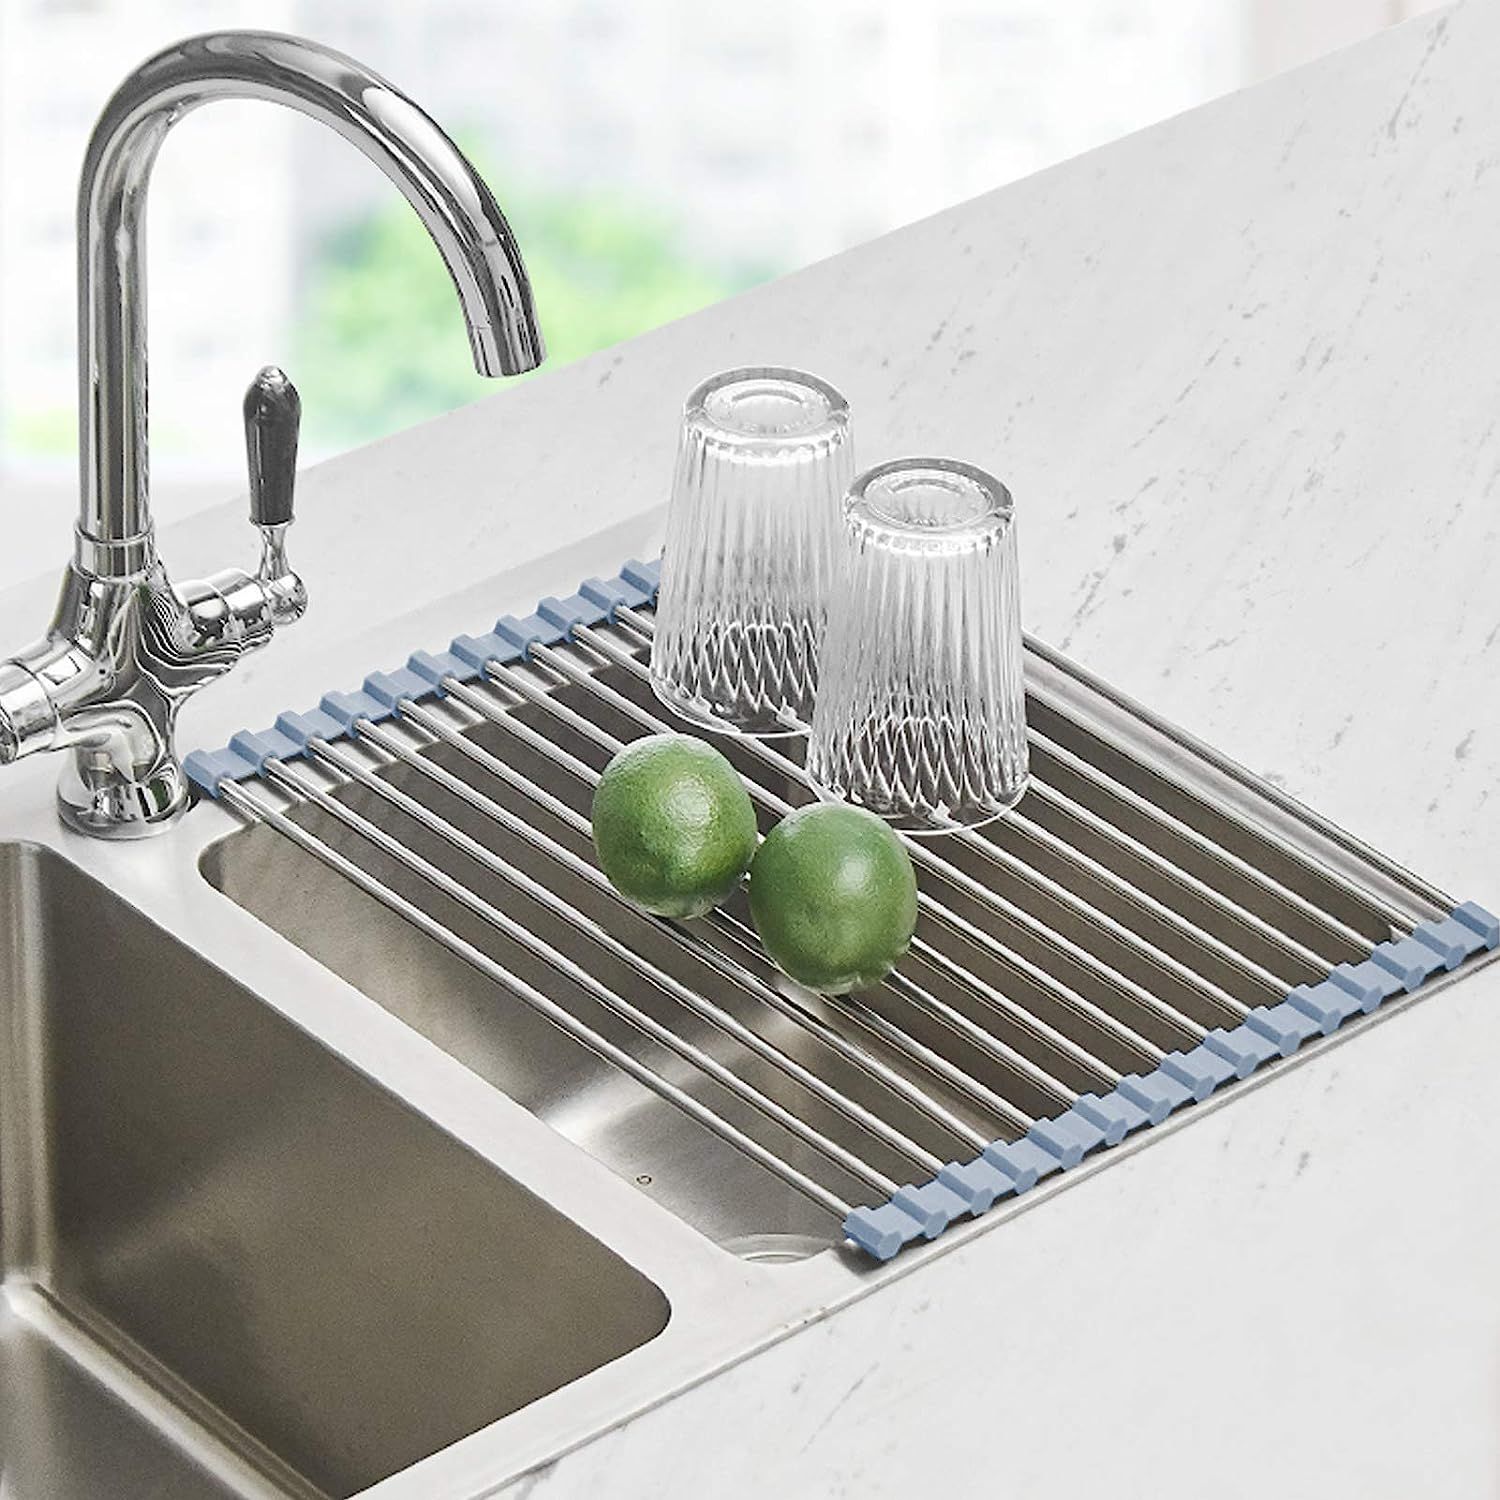 Roll Up Dish Drying Rack Foldable Sink Rack Mat amazon fridge storage amazon kitchen finds inspo | Amazon (US)